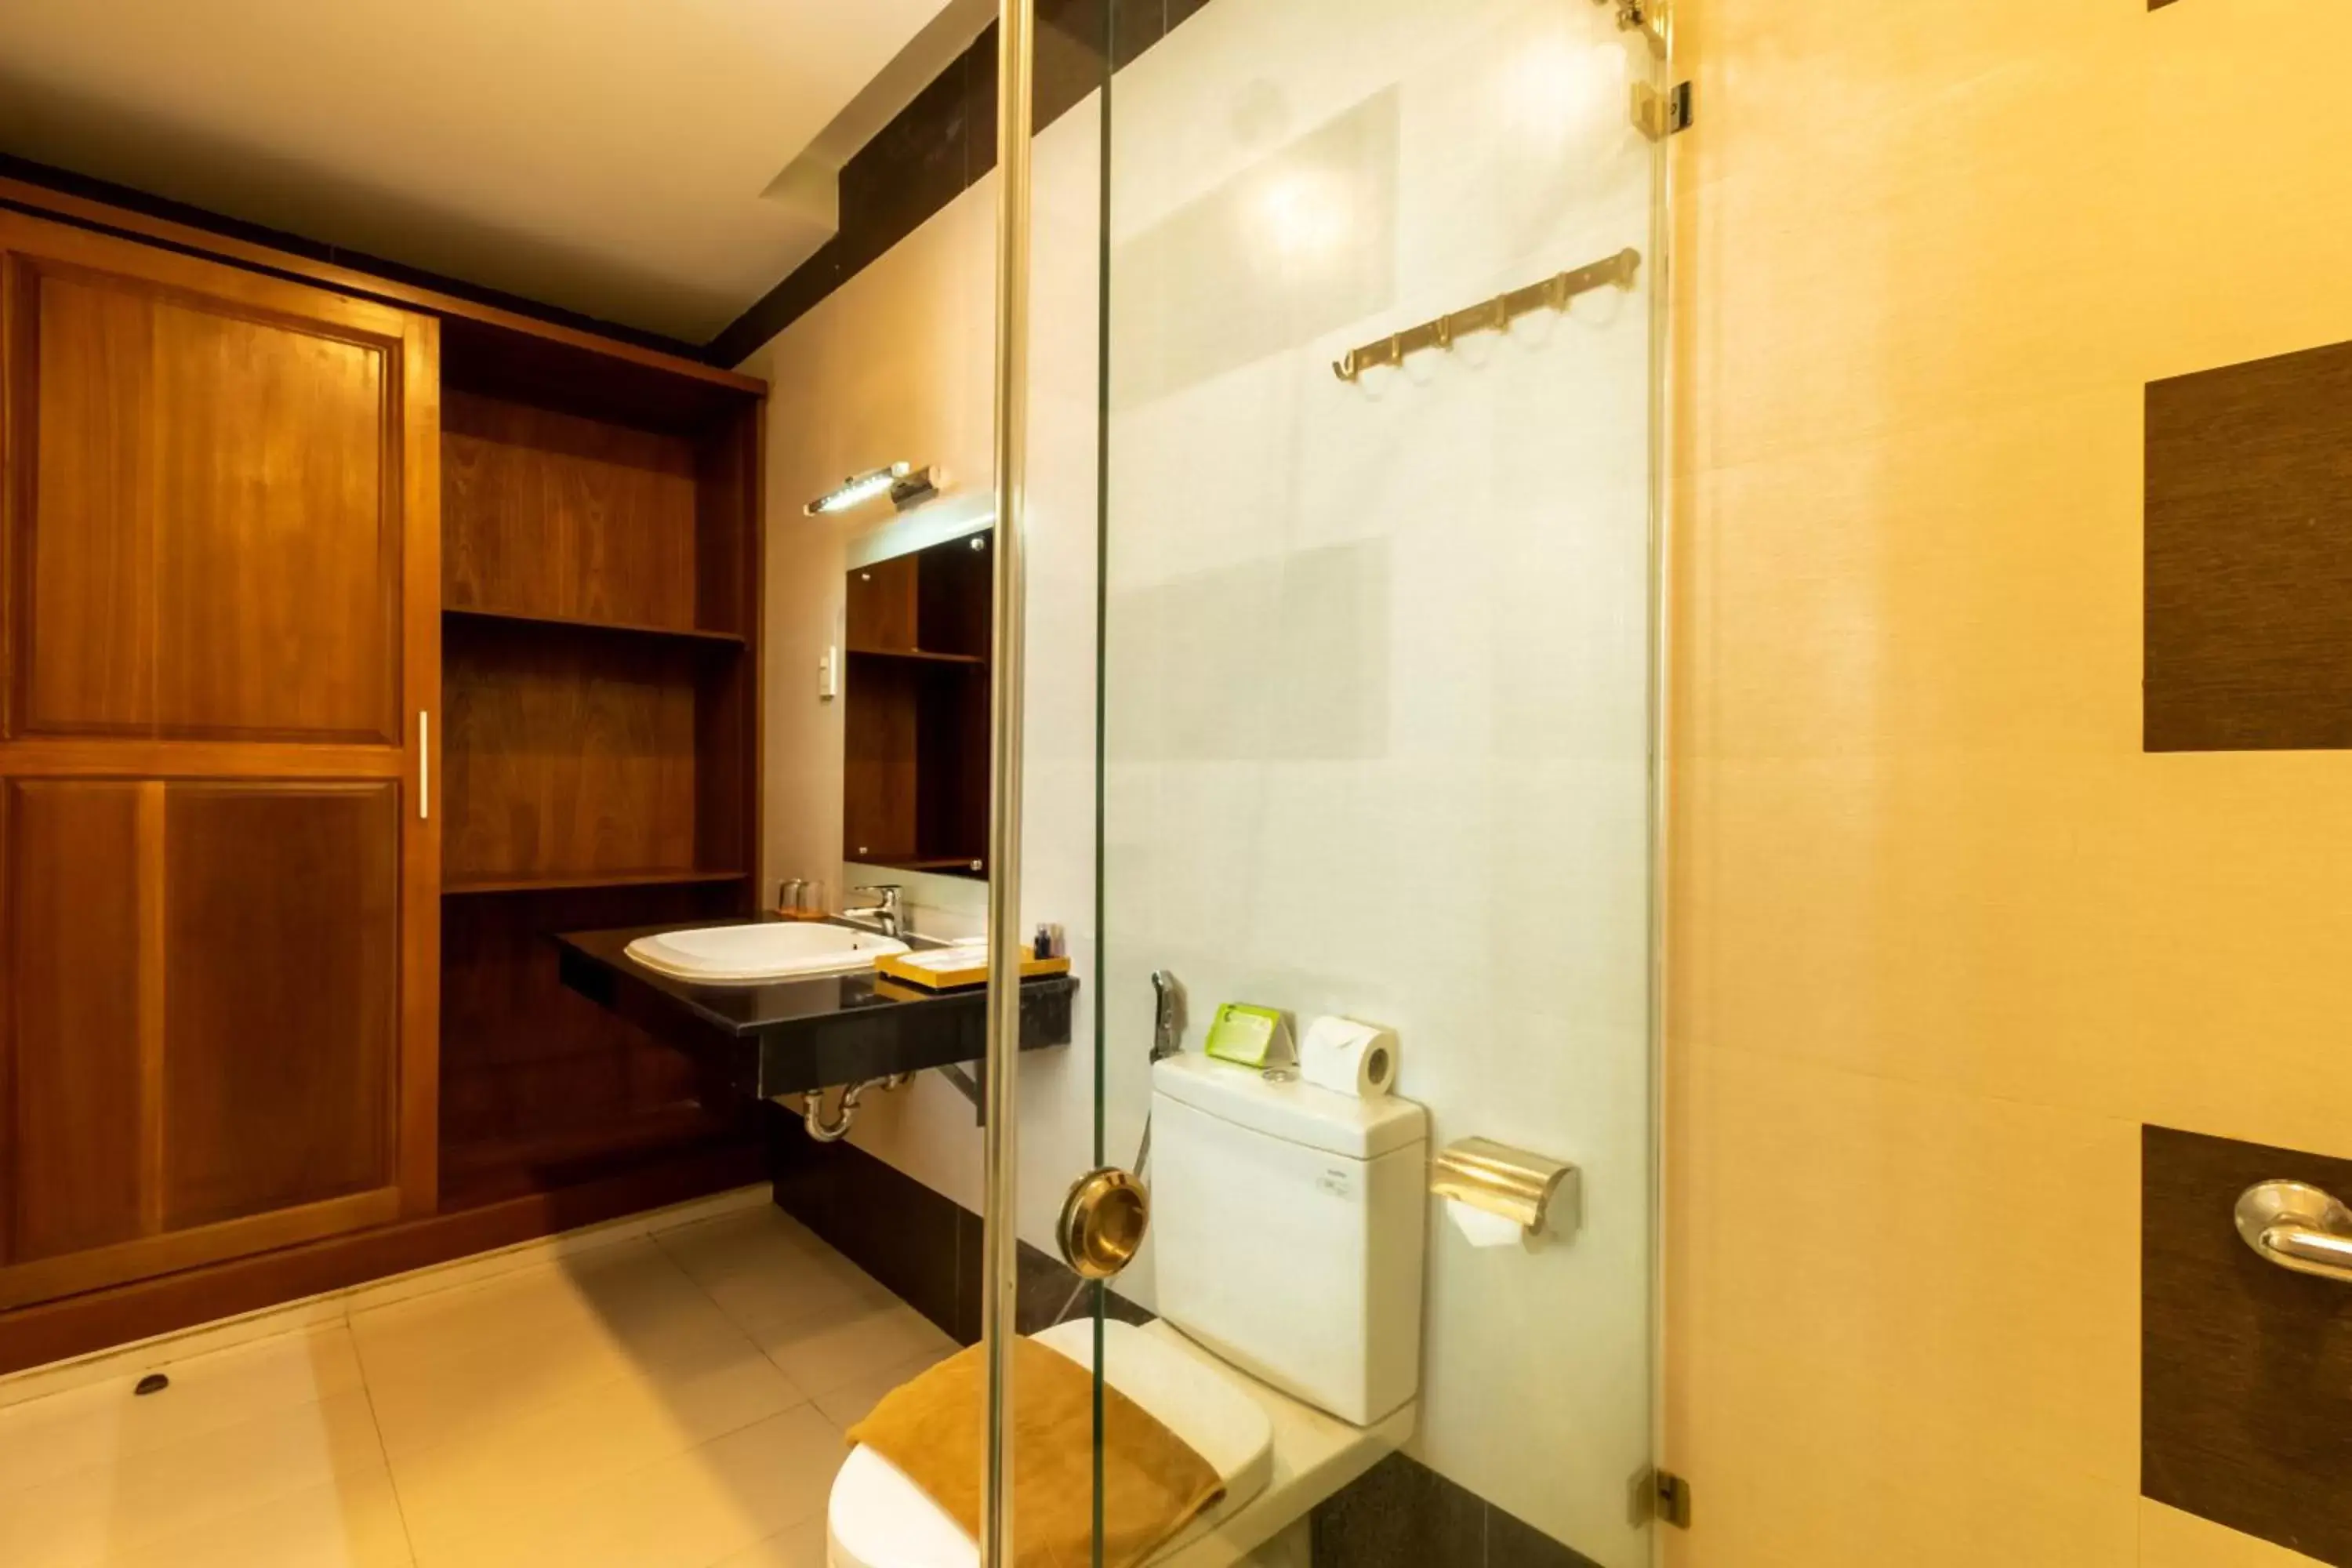 Shower, Bathroom in Airport Saigon Hotel - Gần ẩm thực đêm chợ Phạm Văn Hai